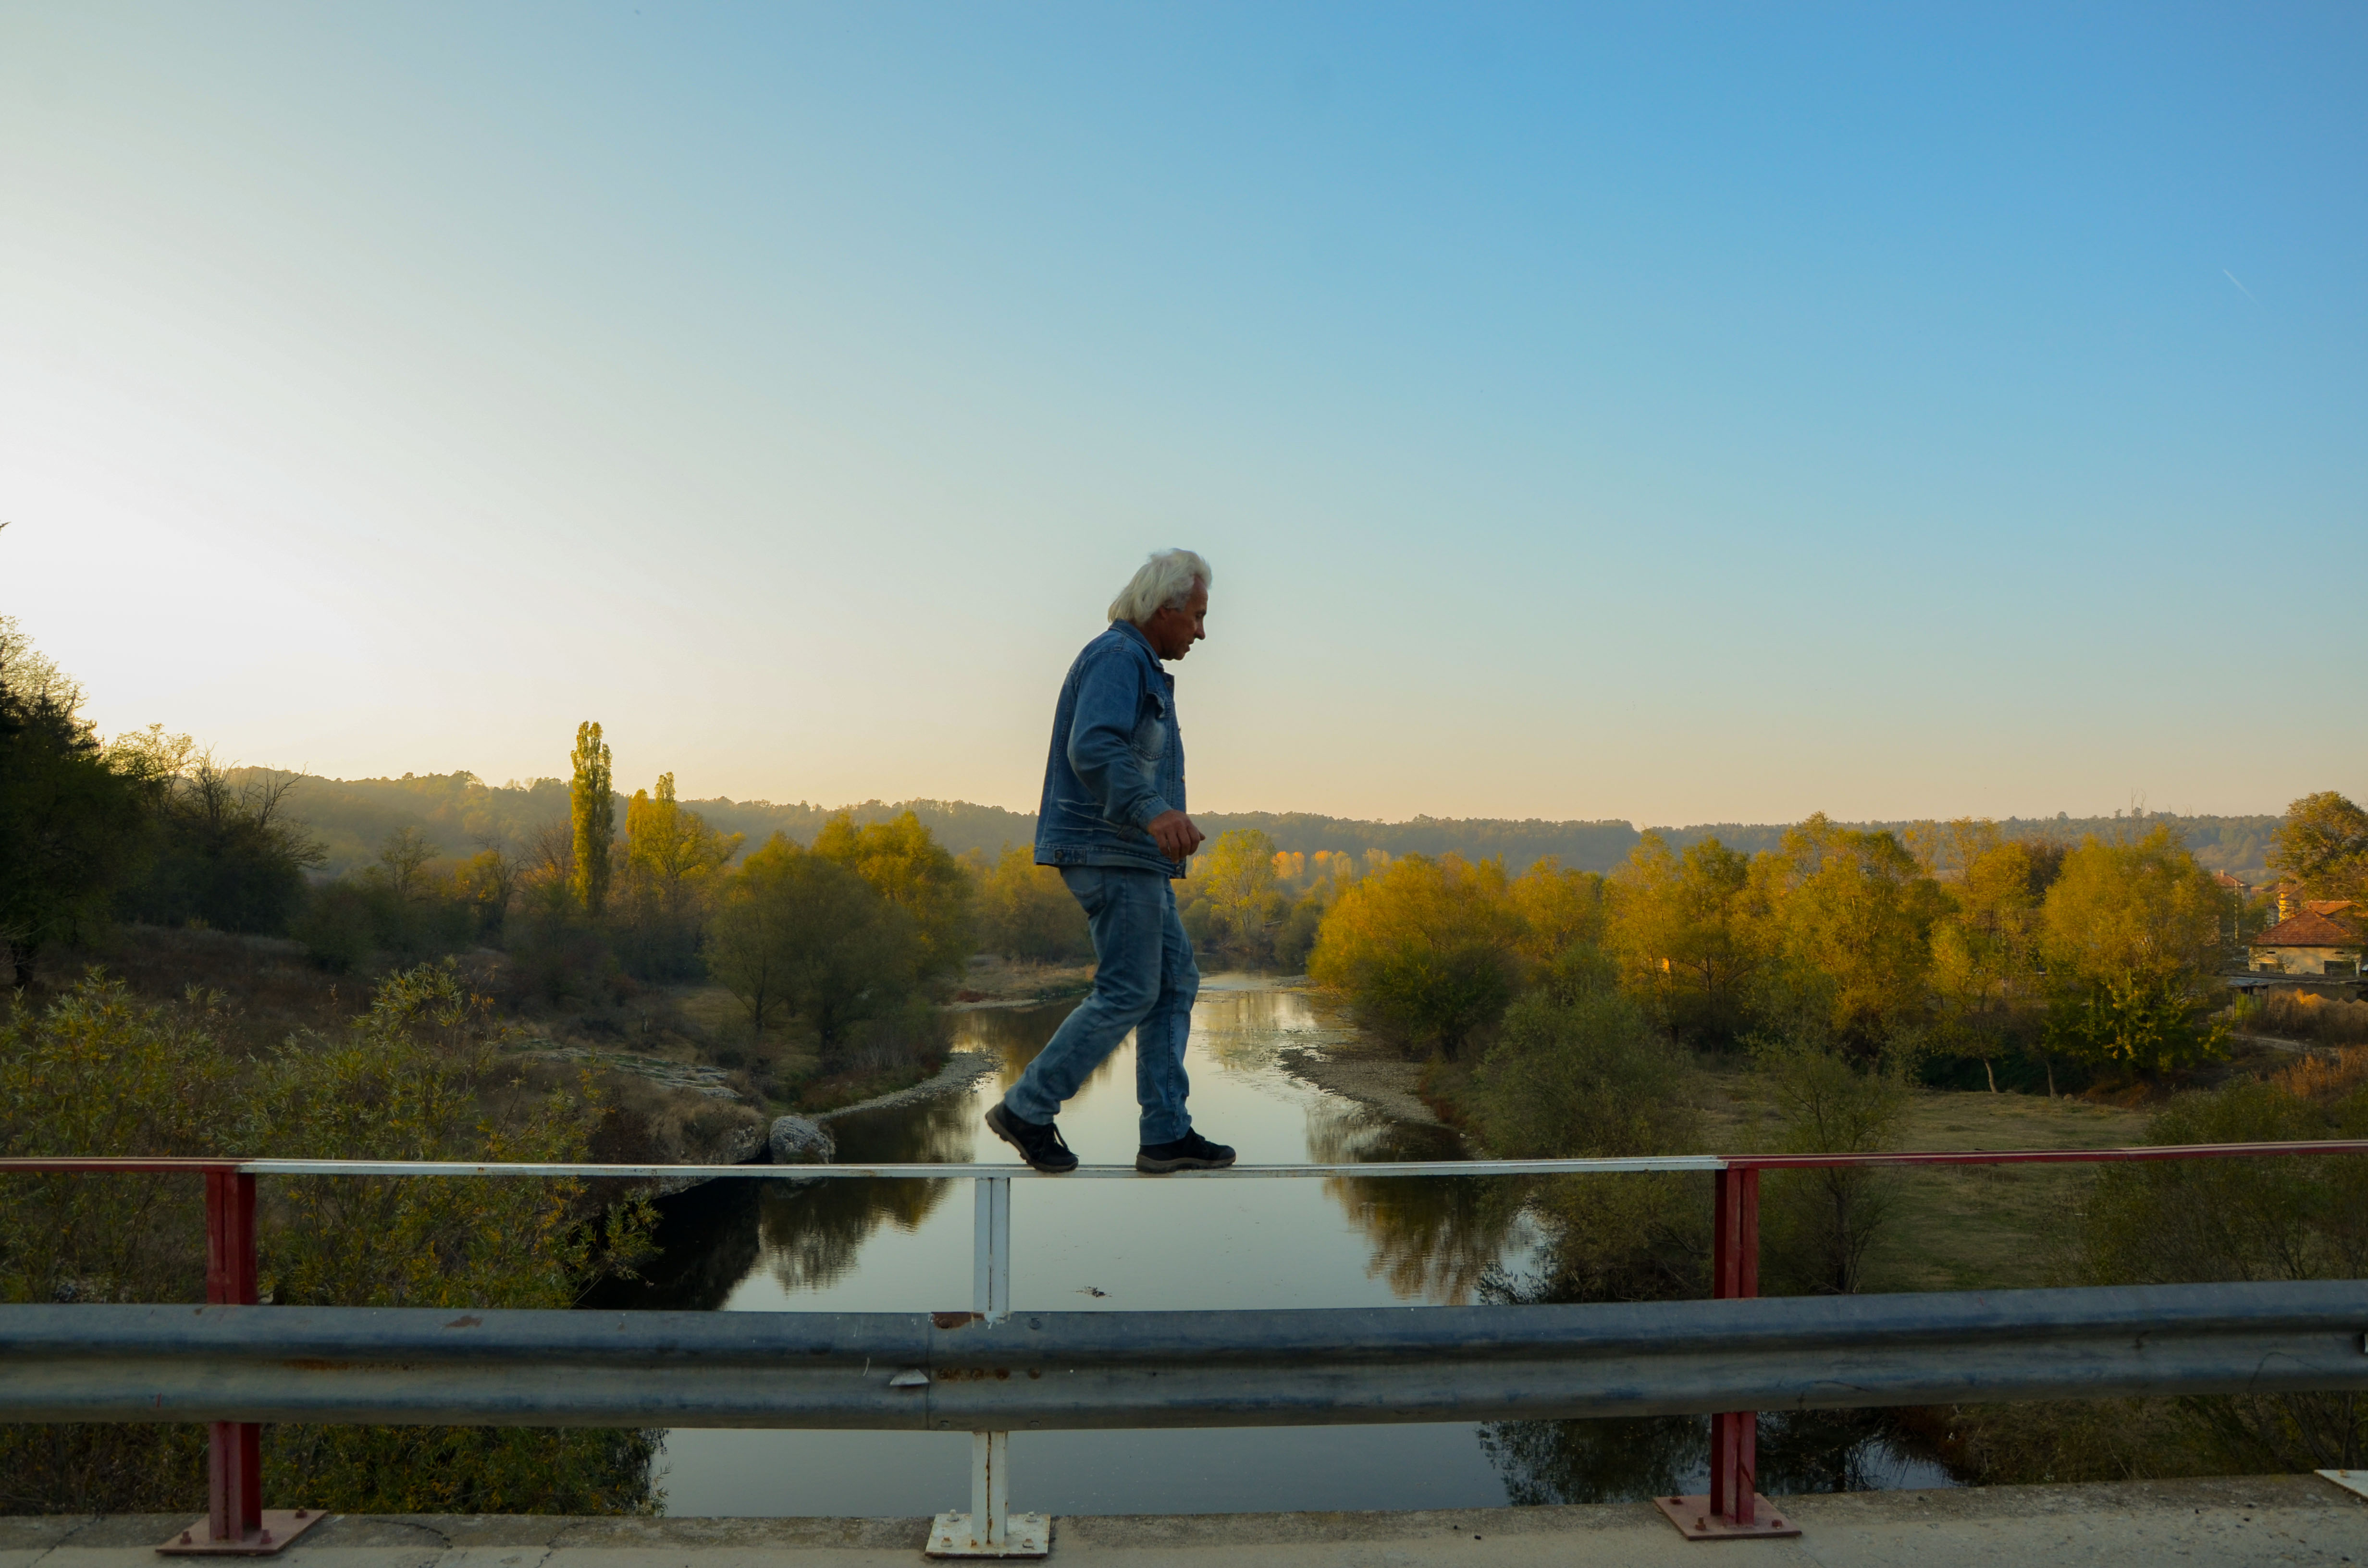 Tikata walking on the handrails of a bridge in Aglen. Yoan Bondakov for AUBG Daily.